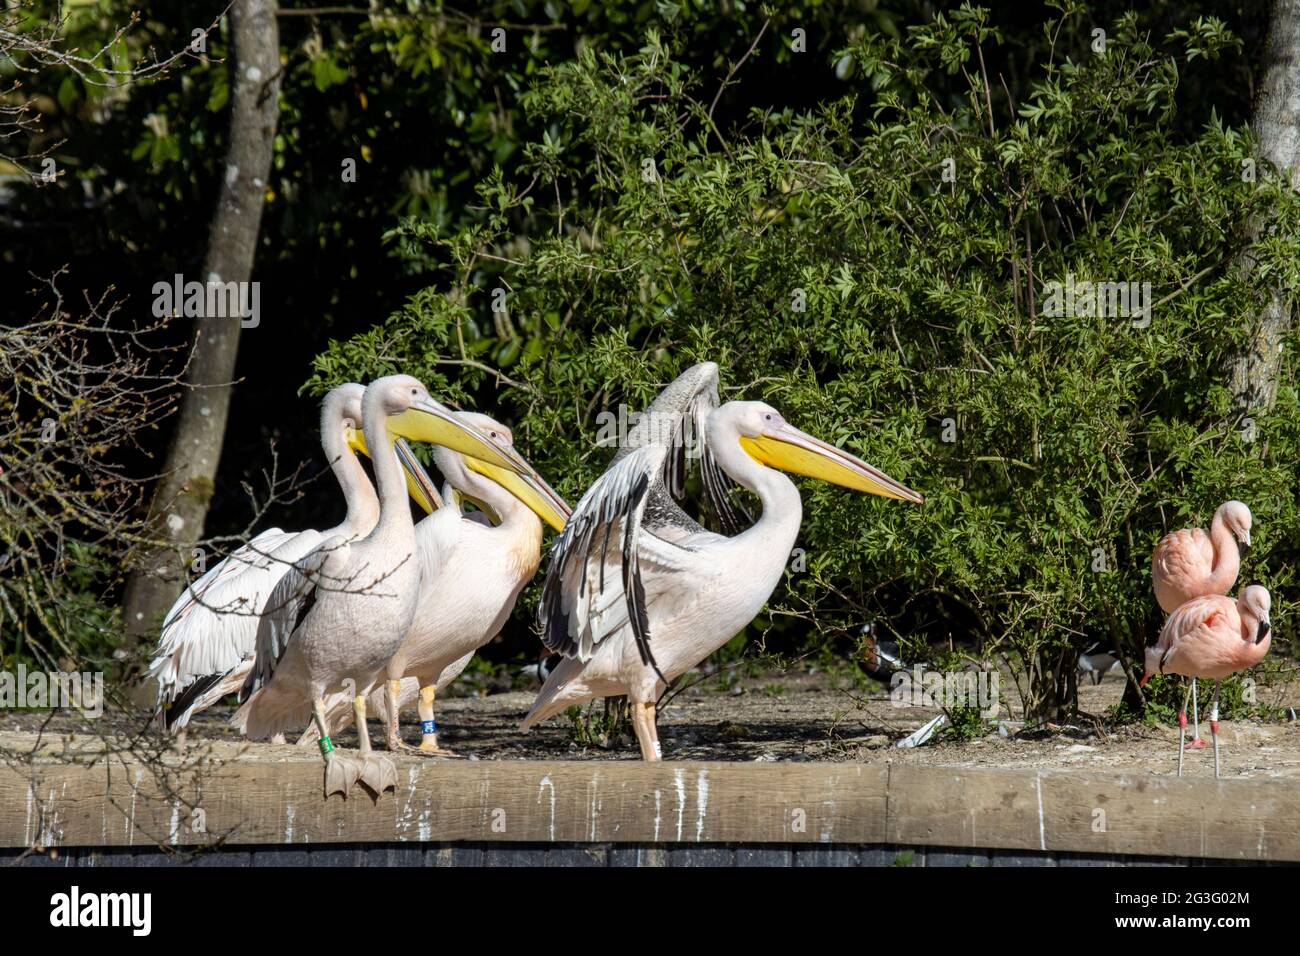 A portrait of pelicans enjoying the waterside Stock Photo